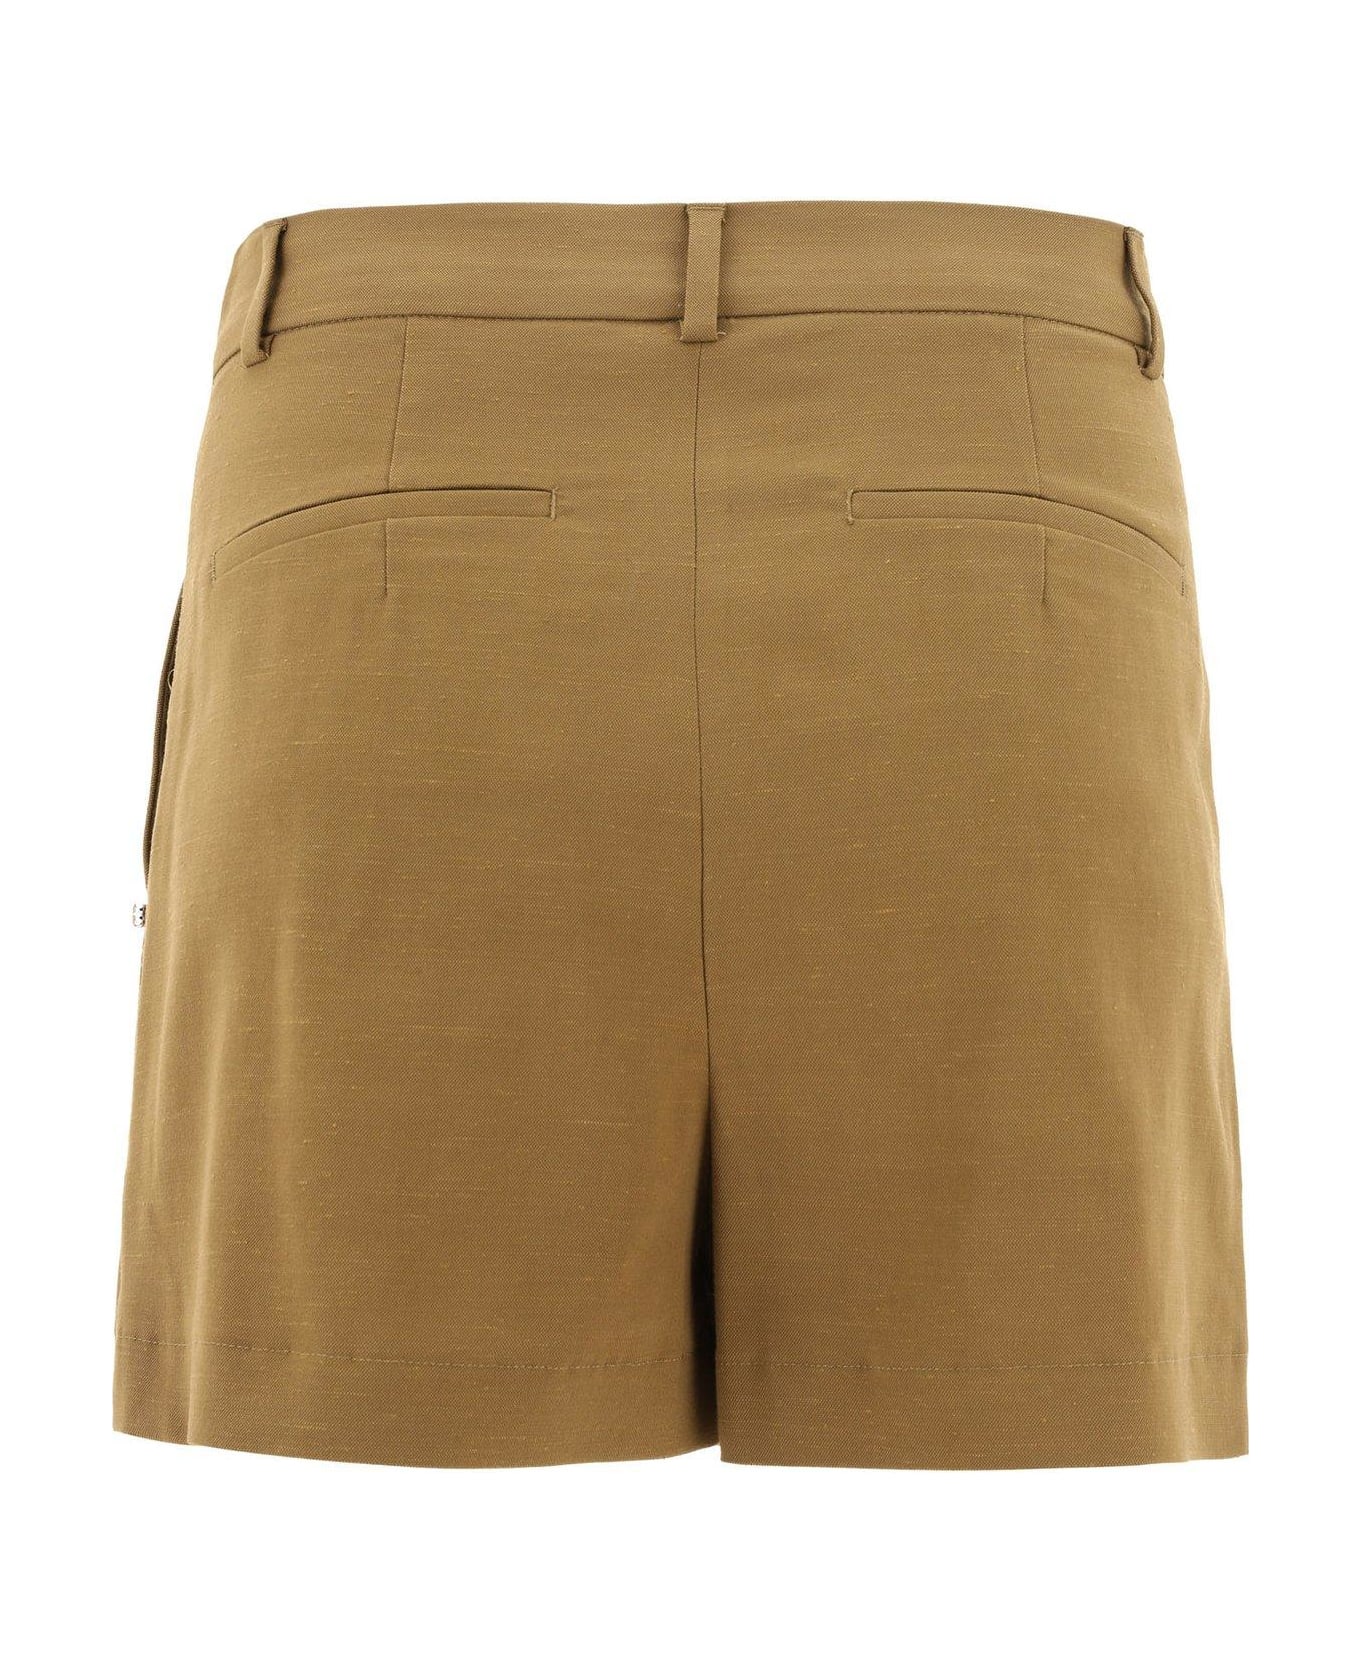 SportMax High Waist Pleated Shorts - MARRONE